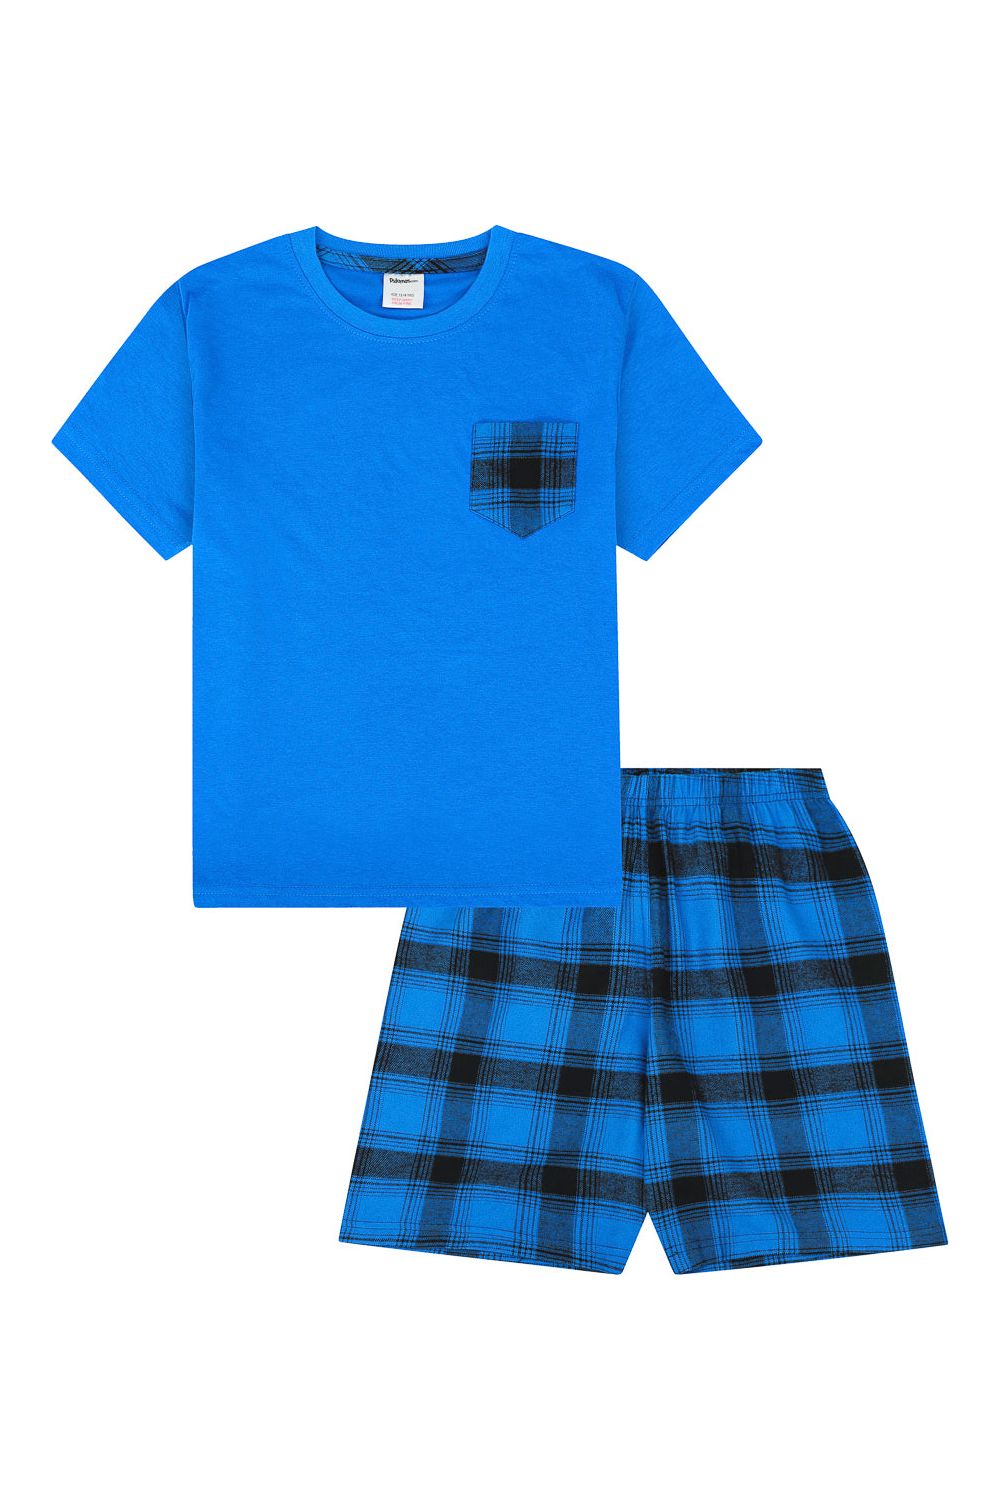 Boys Woven Cotton Check Short Pyjamas - Pyjamas.com